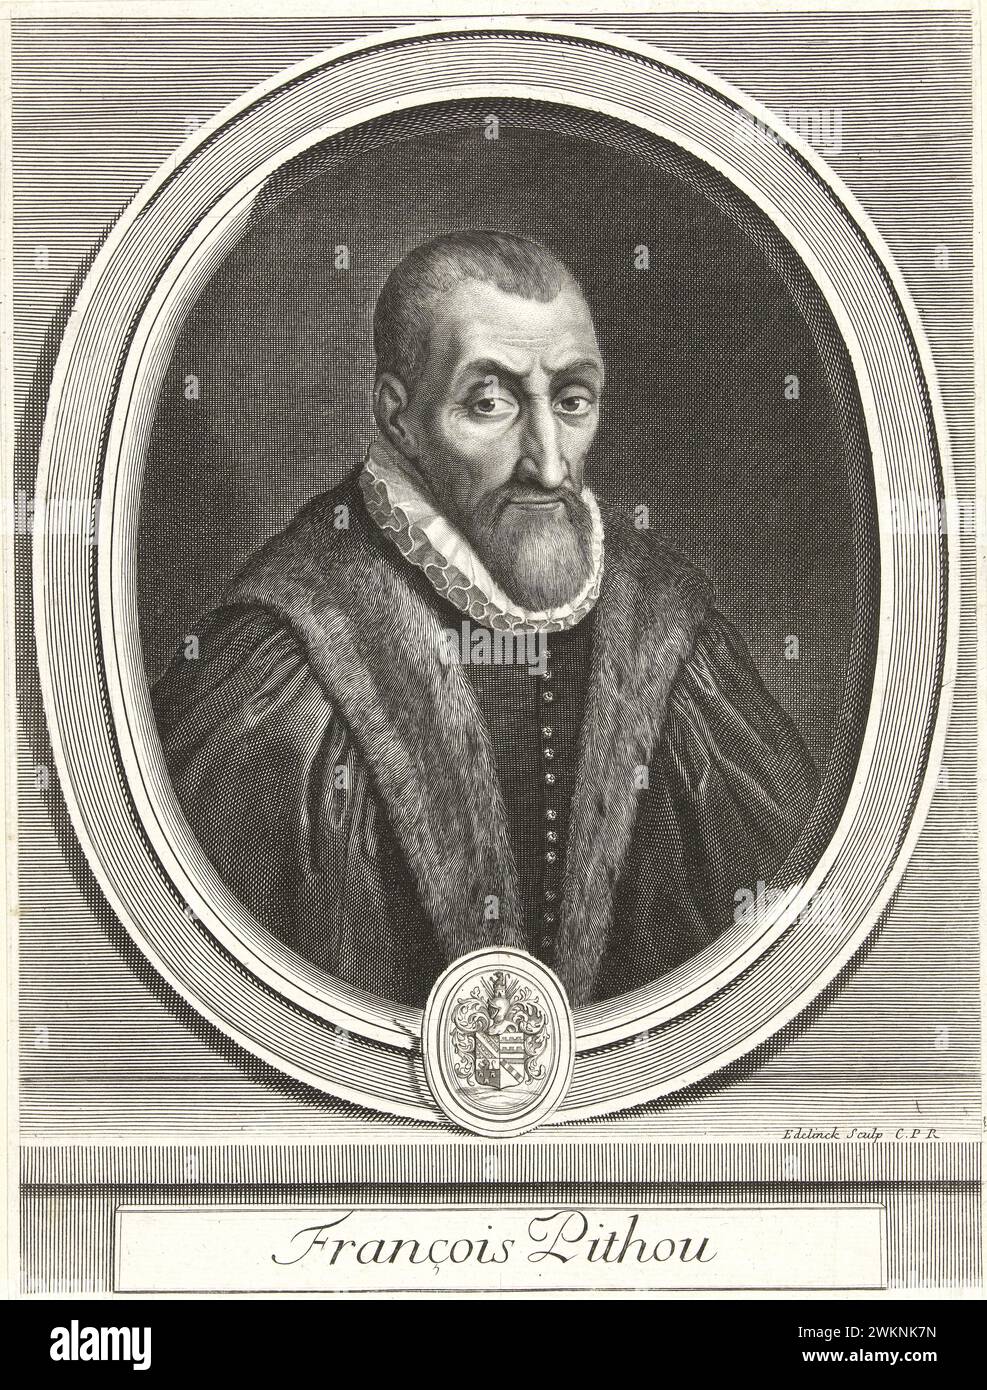 1585 c. , FRANCE : The italian jurist , historian and writer  François PITHOU ( 1543 - 1621 ), young bother of  Pierre Pithou ( 1543 - 1596 ). Portrait engraved by Gerard Edelinck ( 1666 - 1707 ), pubblished in 1700 c. , Paris . - HISTORY - FOTO STORICHE - HISTORIAN - STORICO - SCRITTORE - WRITER - LETTERATURA - LITERATURE - giureconsulto - GIURISTA - LEGGE - LAY - nobili - nobiltà francese - french nobility - FRANCIA - INCISIONE - ENGRAVING - ILLUSTRATION - ILLUSTRAZIONE  - collar - collare - colletto - GORGIERA - pizzo - lace -   beard - barba - fur - pelliccia --- Archivio GBB Stock Photo